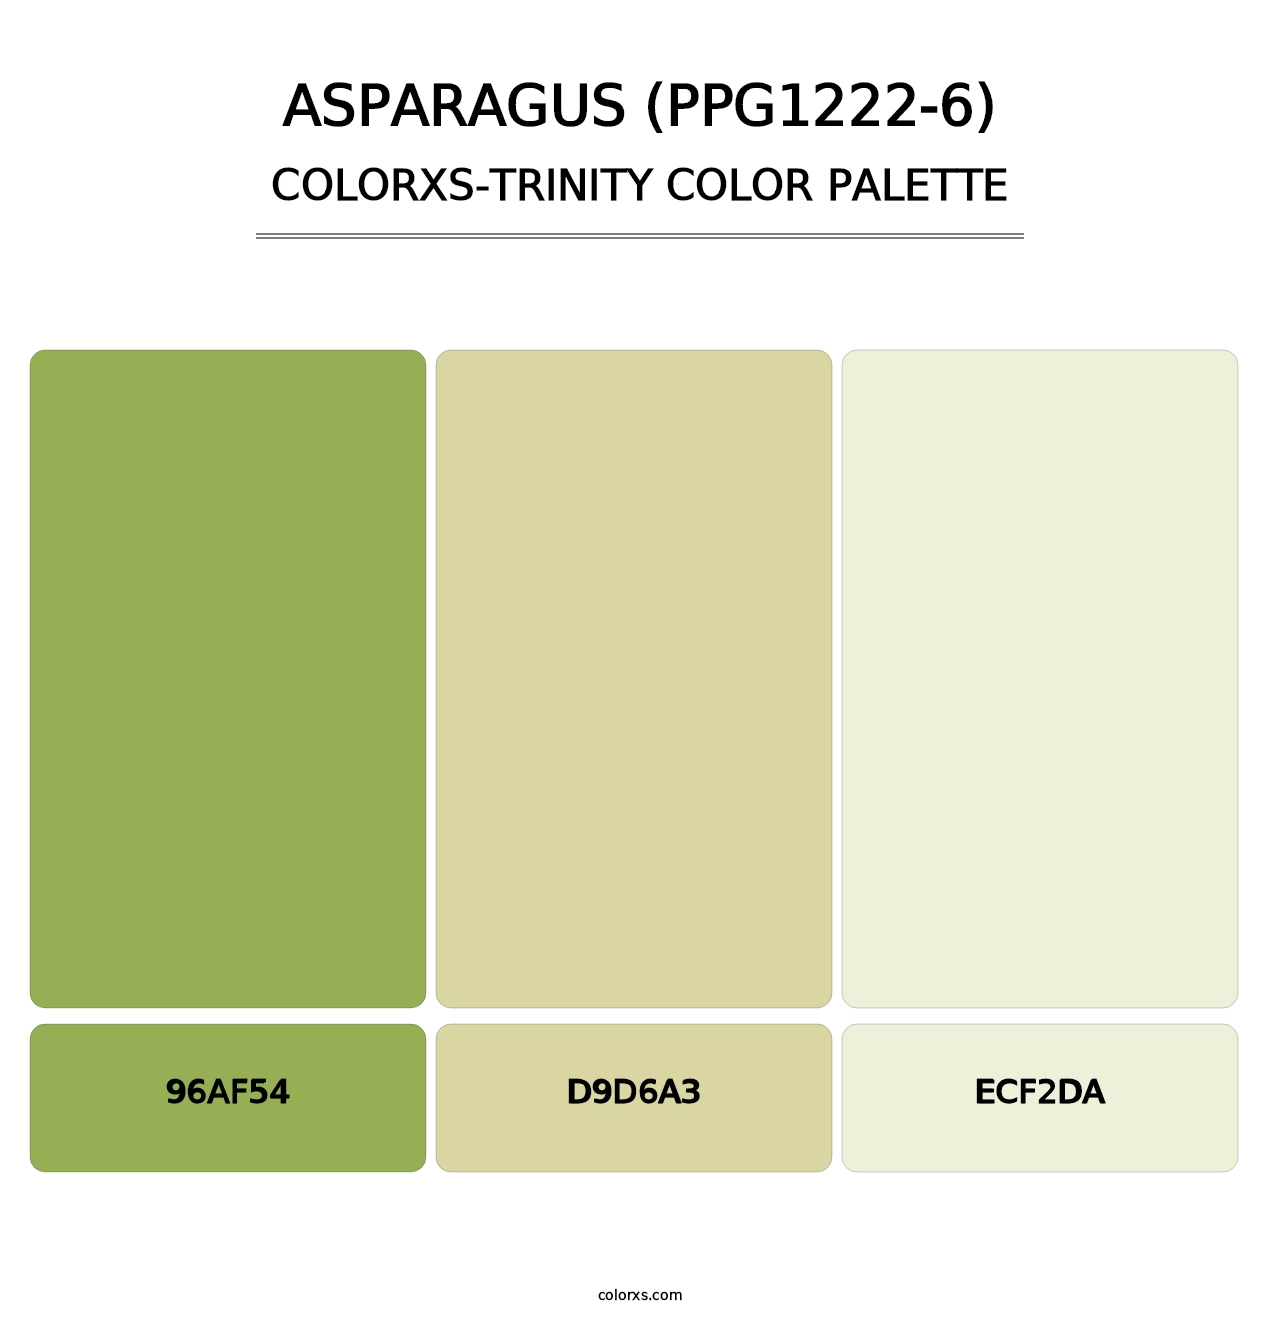 Asparagus (PPG1222-6) - Colorxs Trinity Palette